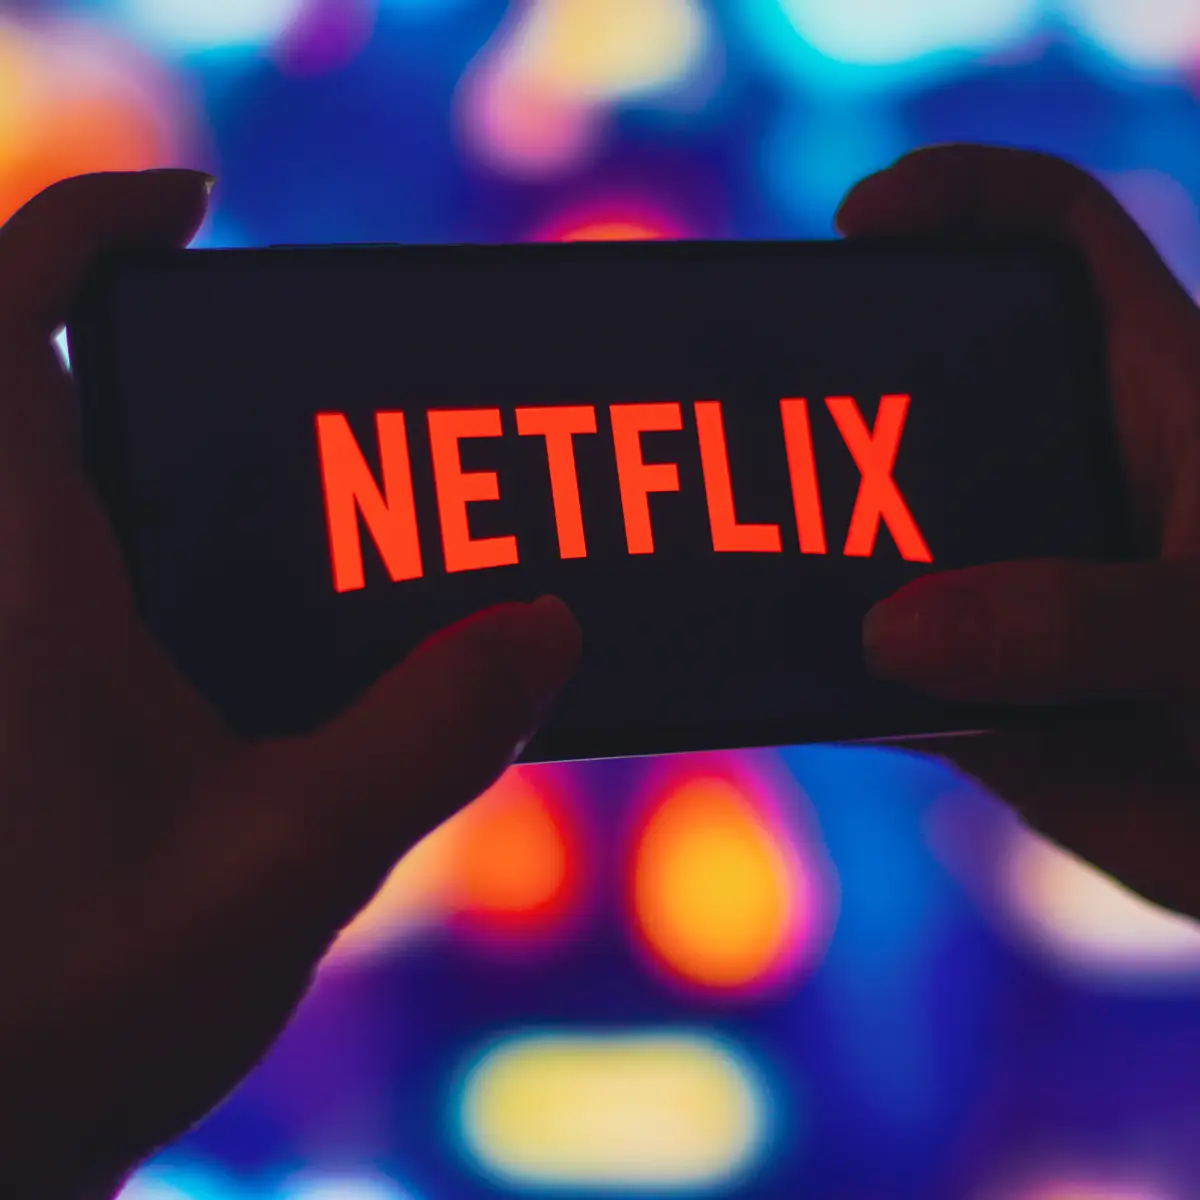 Códigos da Netflix: como usá-los para encontrar filmes escondidos